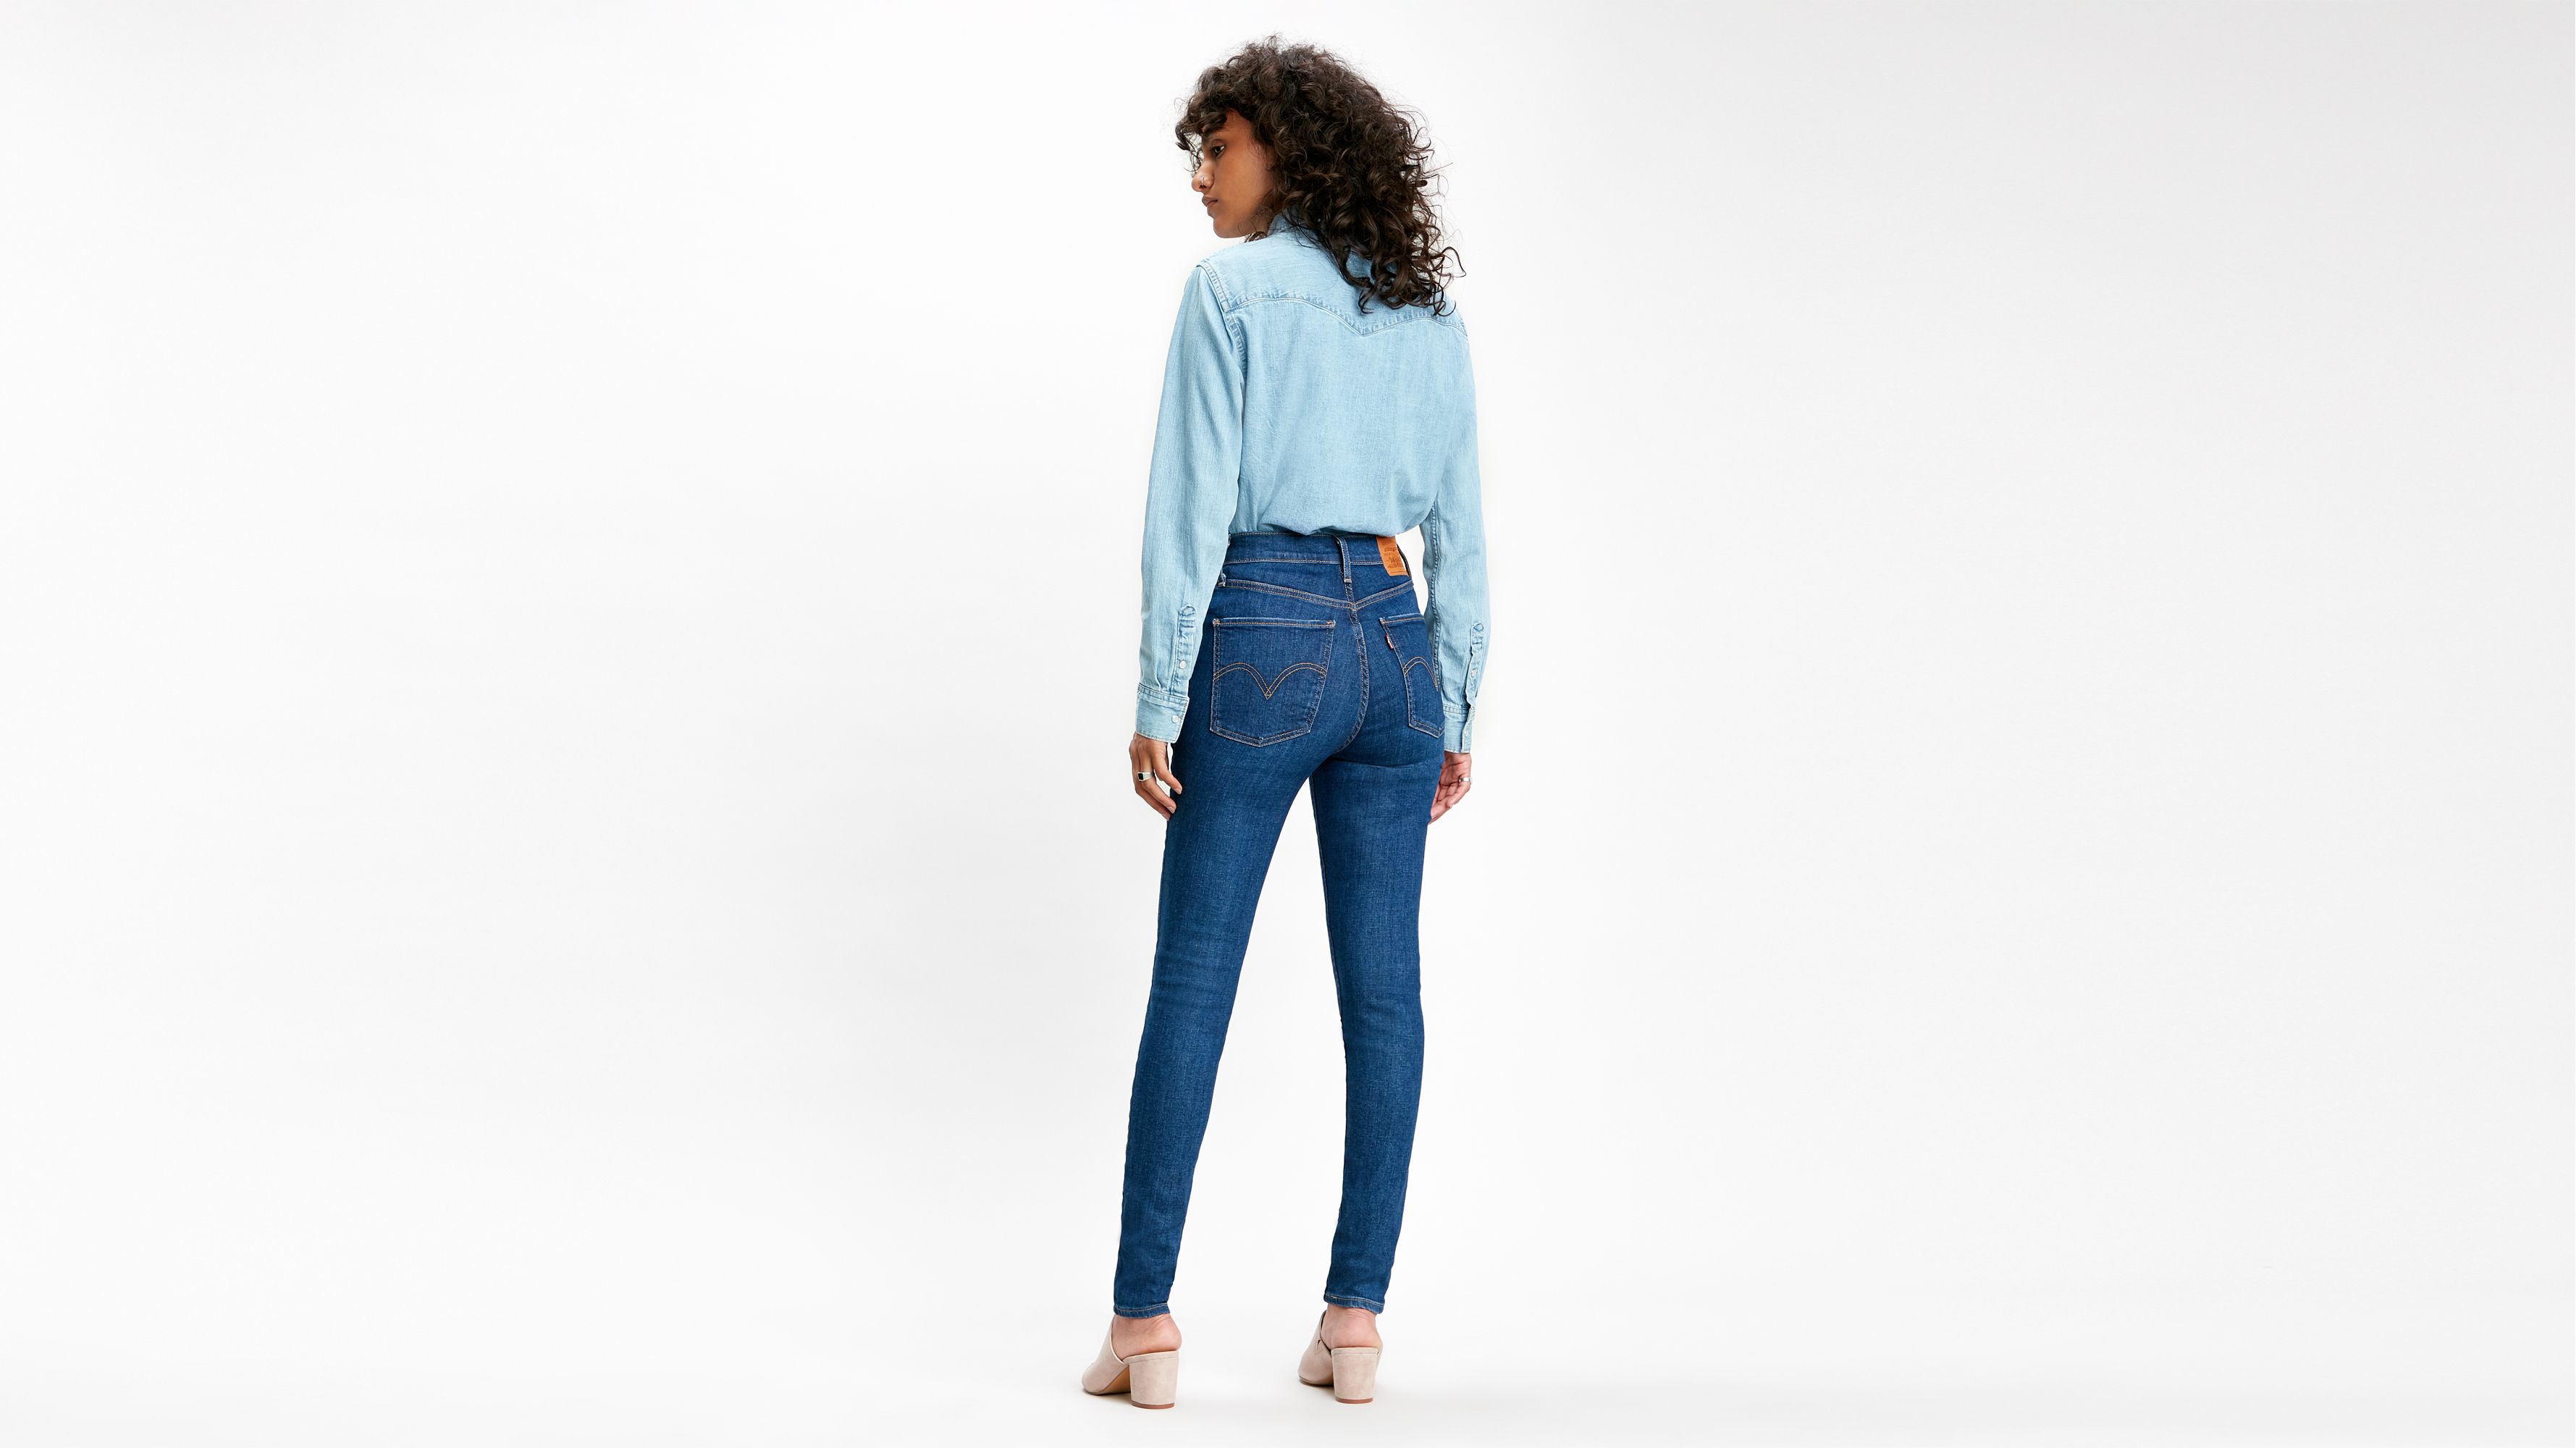 versace jeans track pants